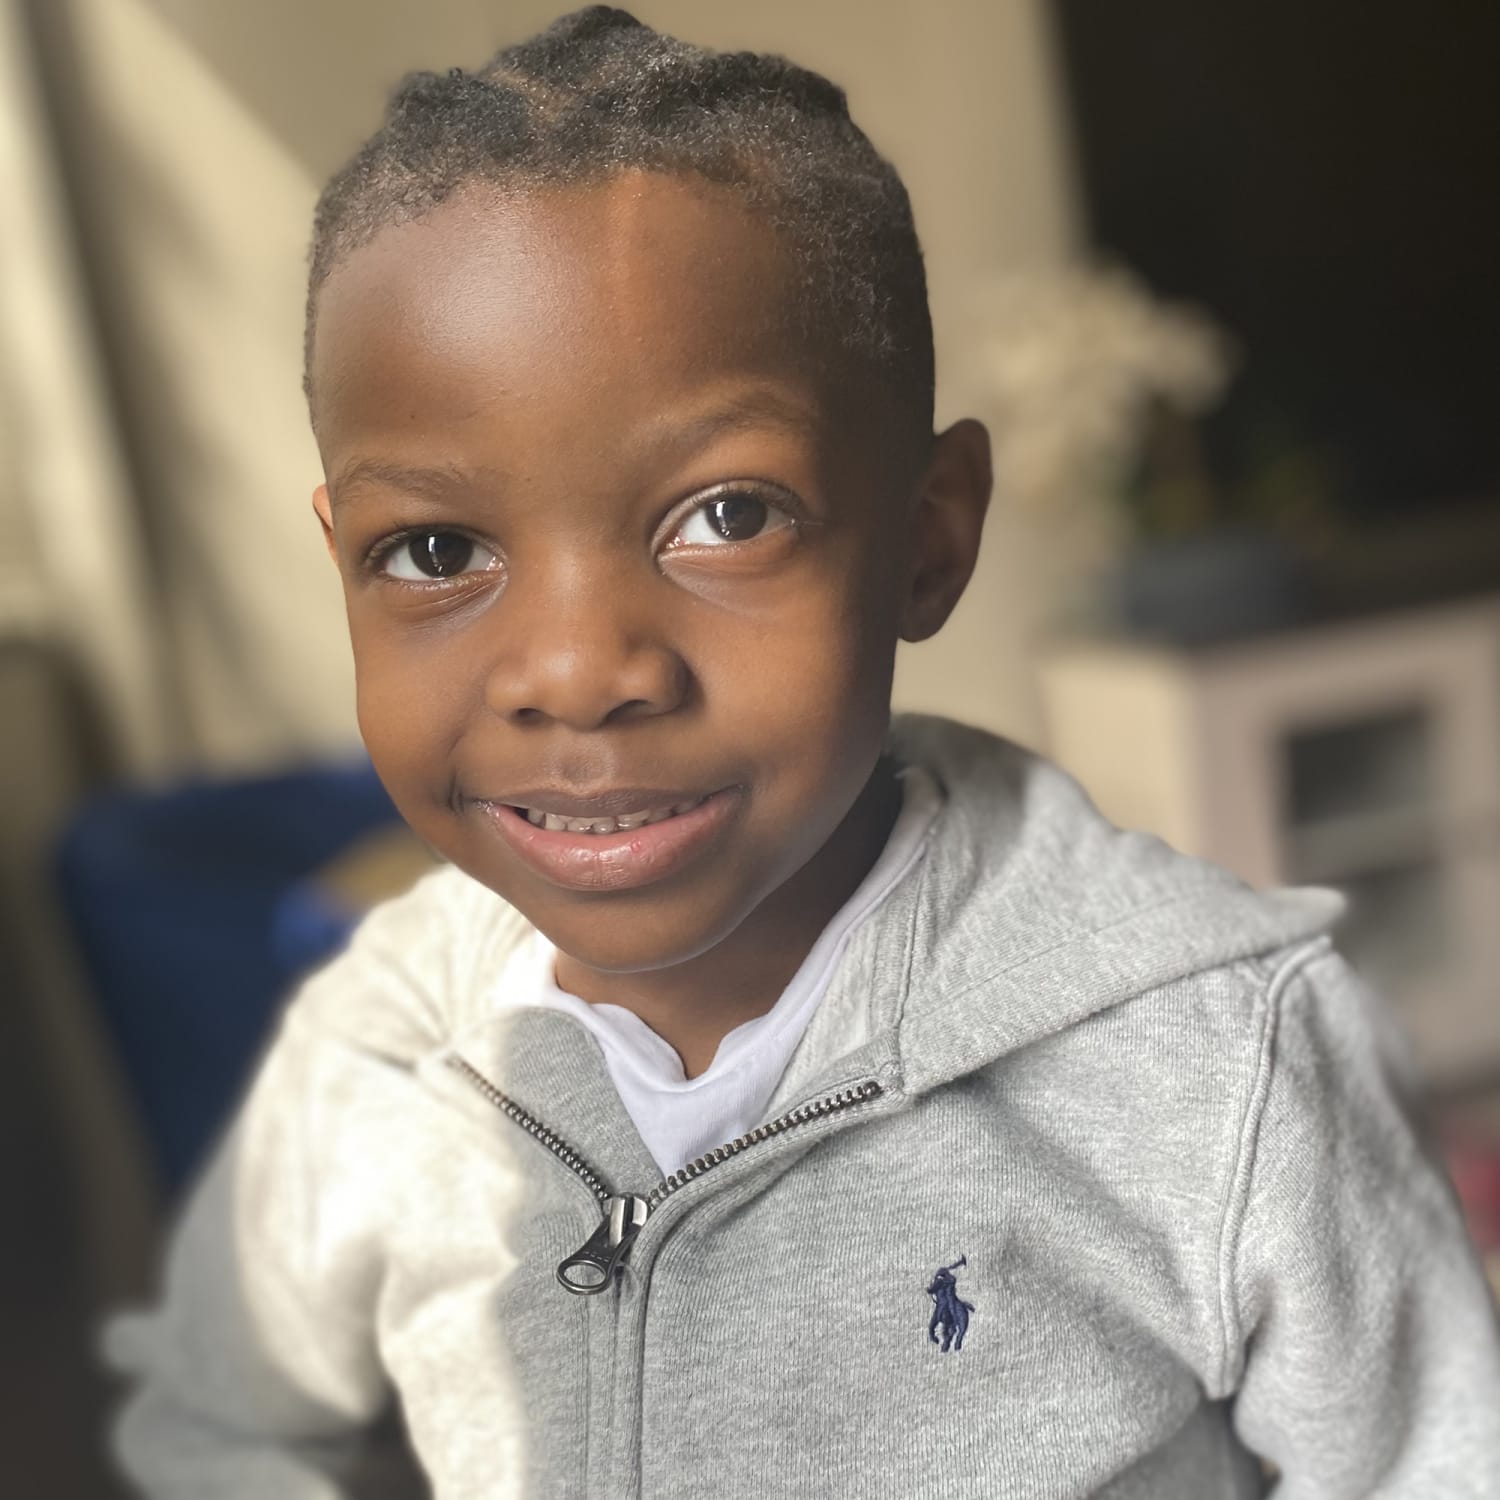 School tells 4-year-old Black child he can't wear braids